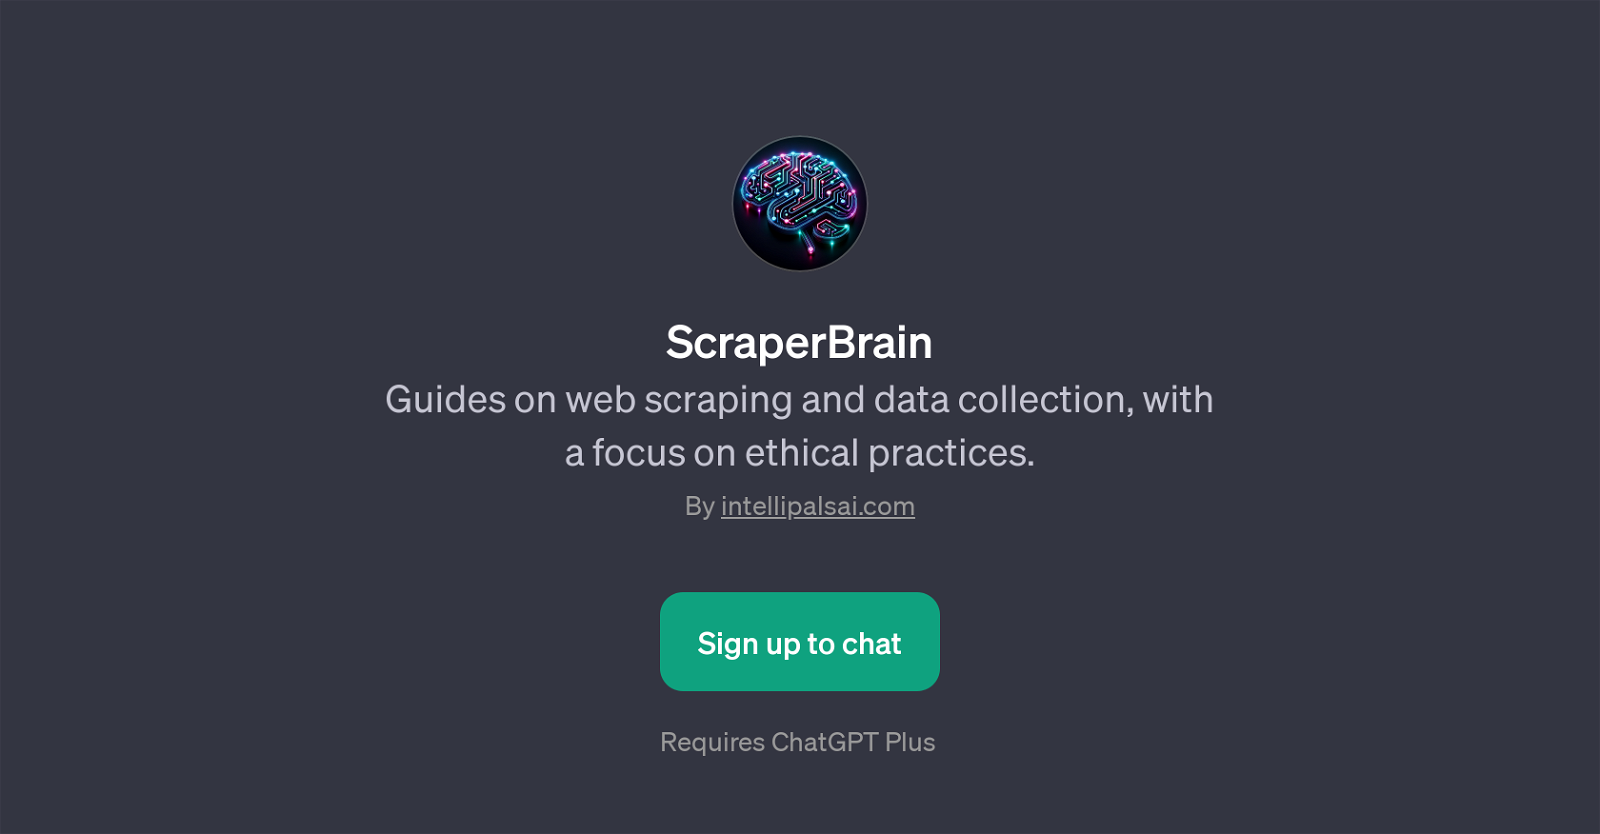 ScraperBrain website